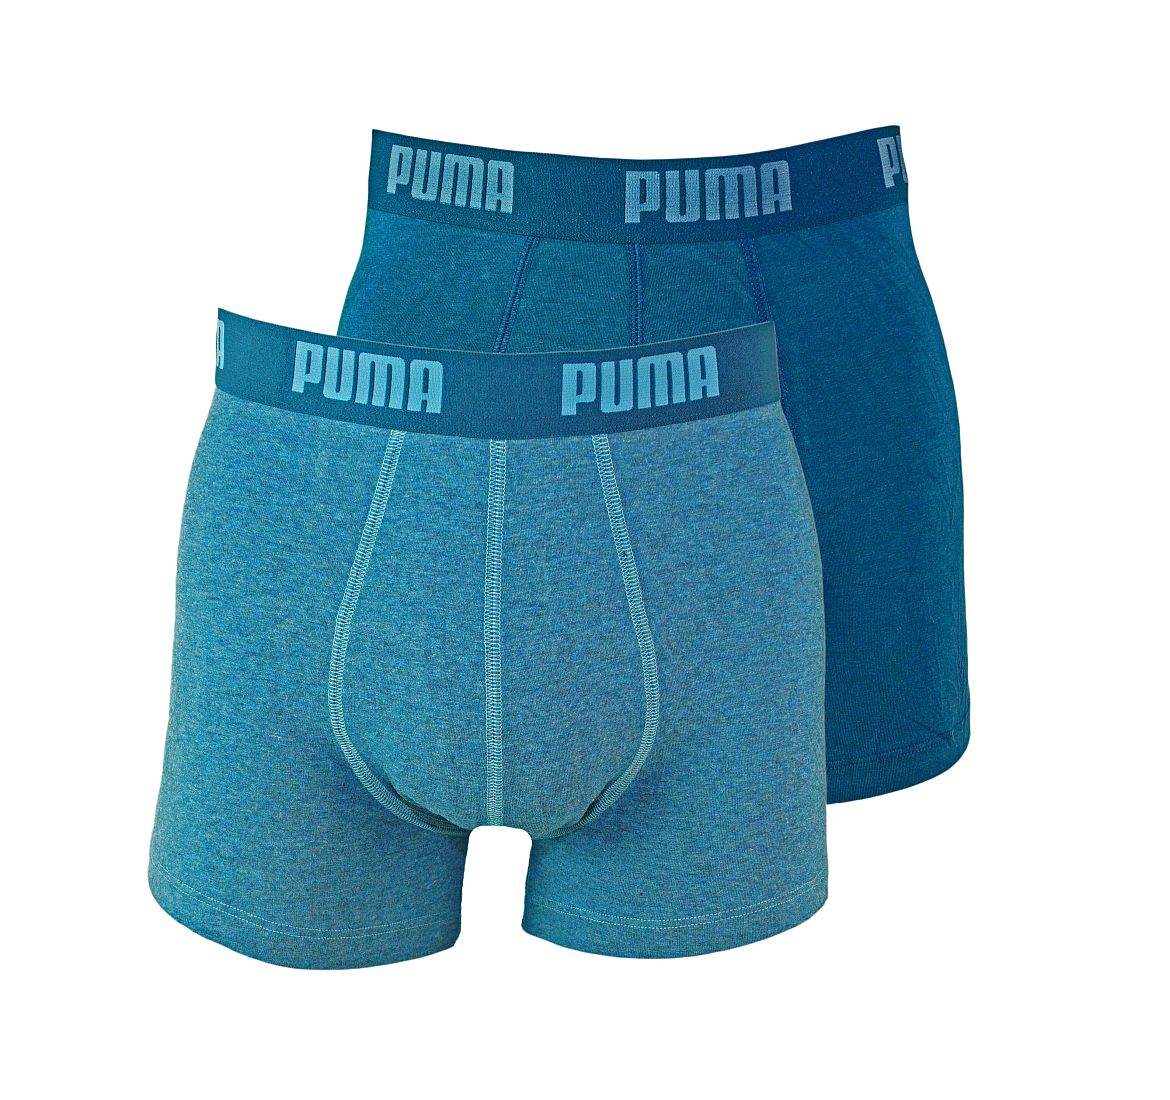 PUMA Shorts Unterhosen 2er Pack Boxer 521015001 162 020 denim SF17-PMS1